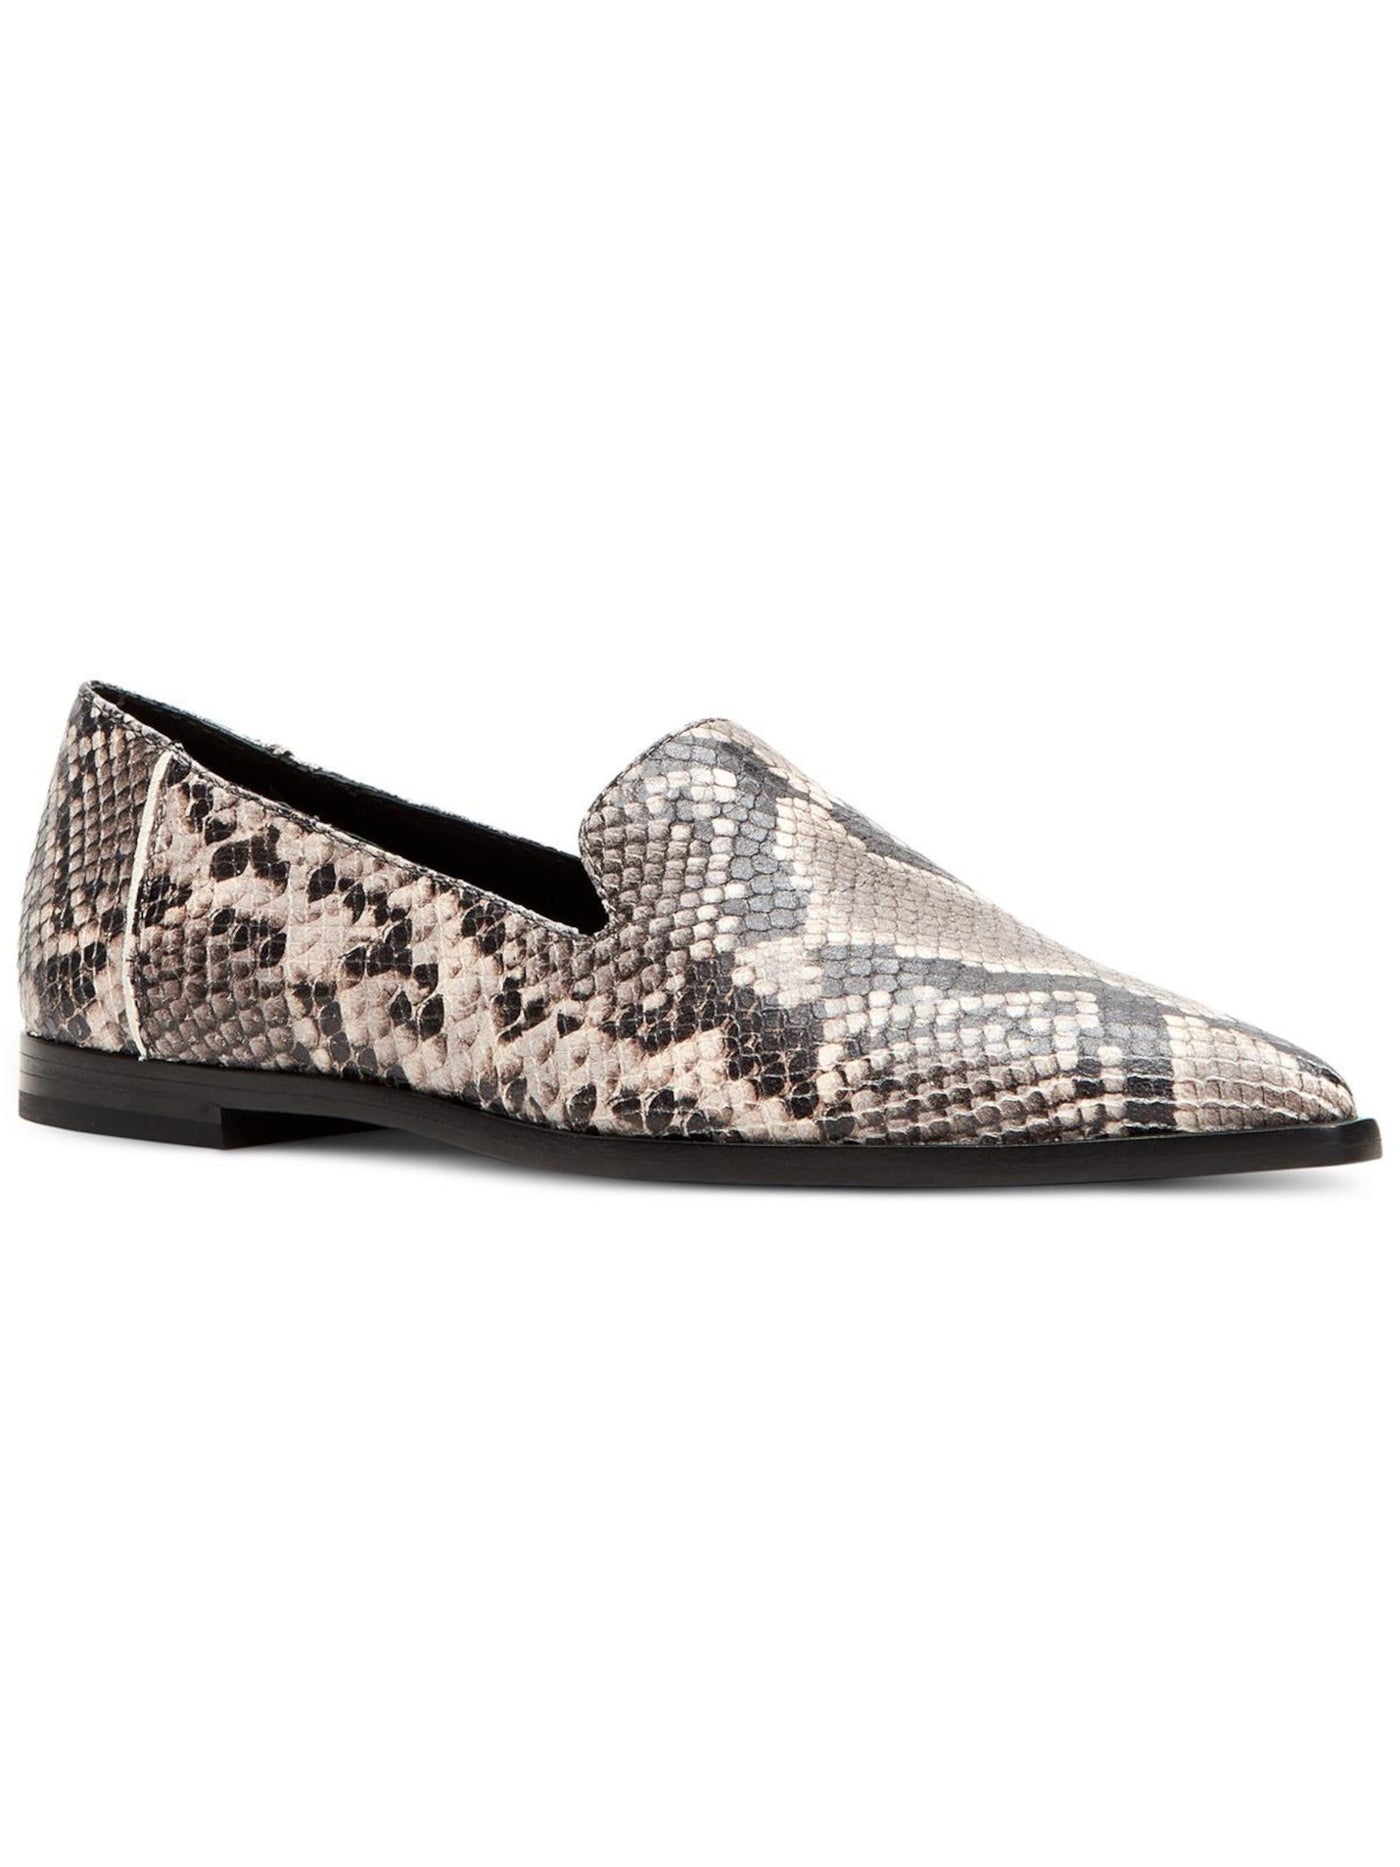 FRYE Womens Beige Snake Print Comfort Kenzie Pointed Toe Block Heel Slip On Leather Loafers Shoes 8 M